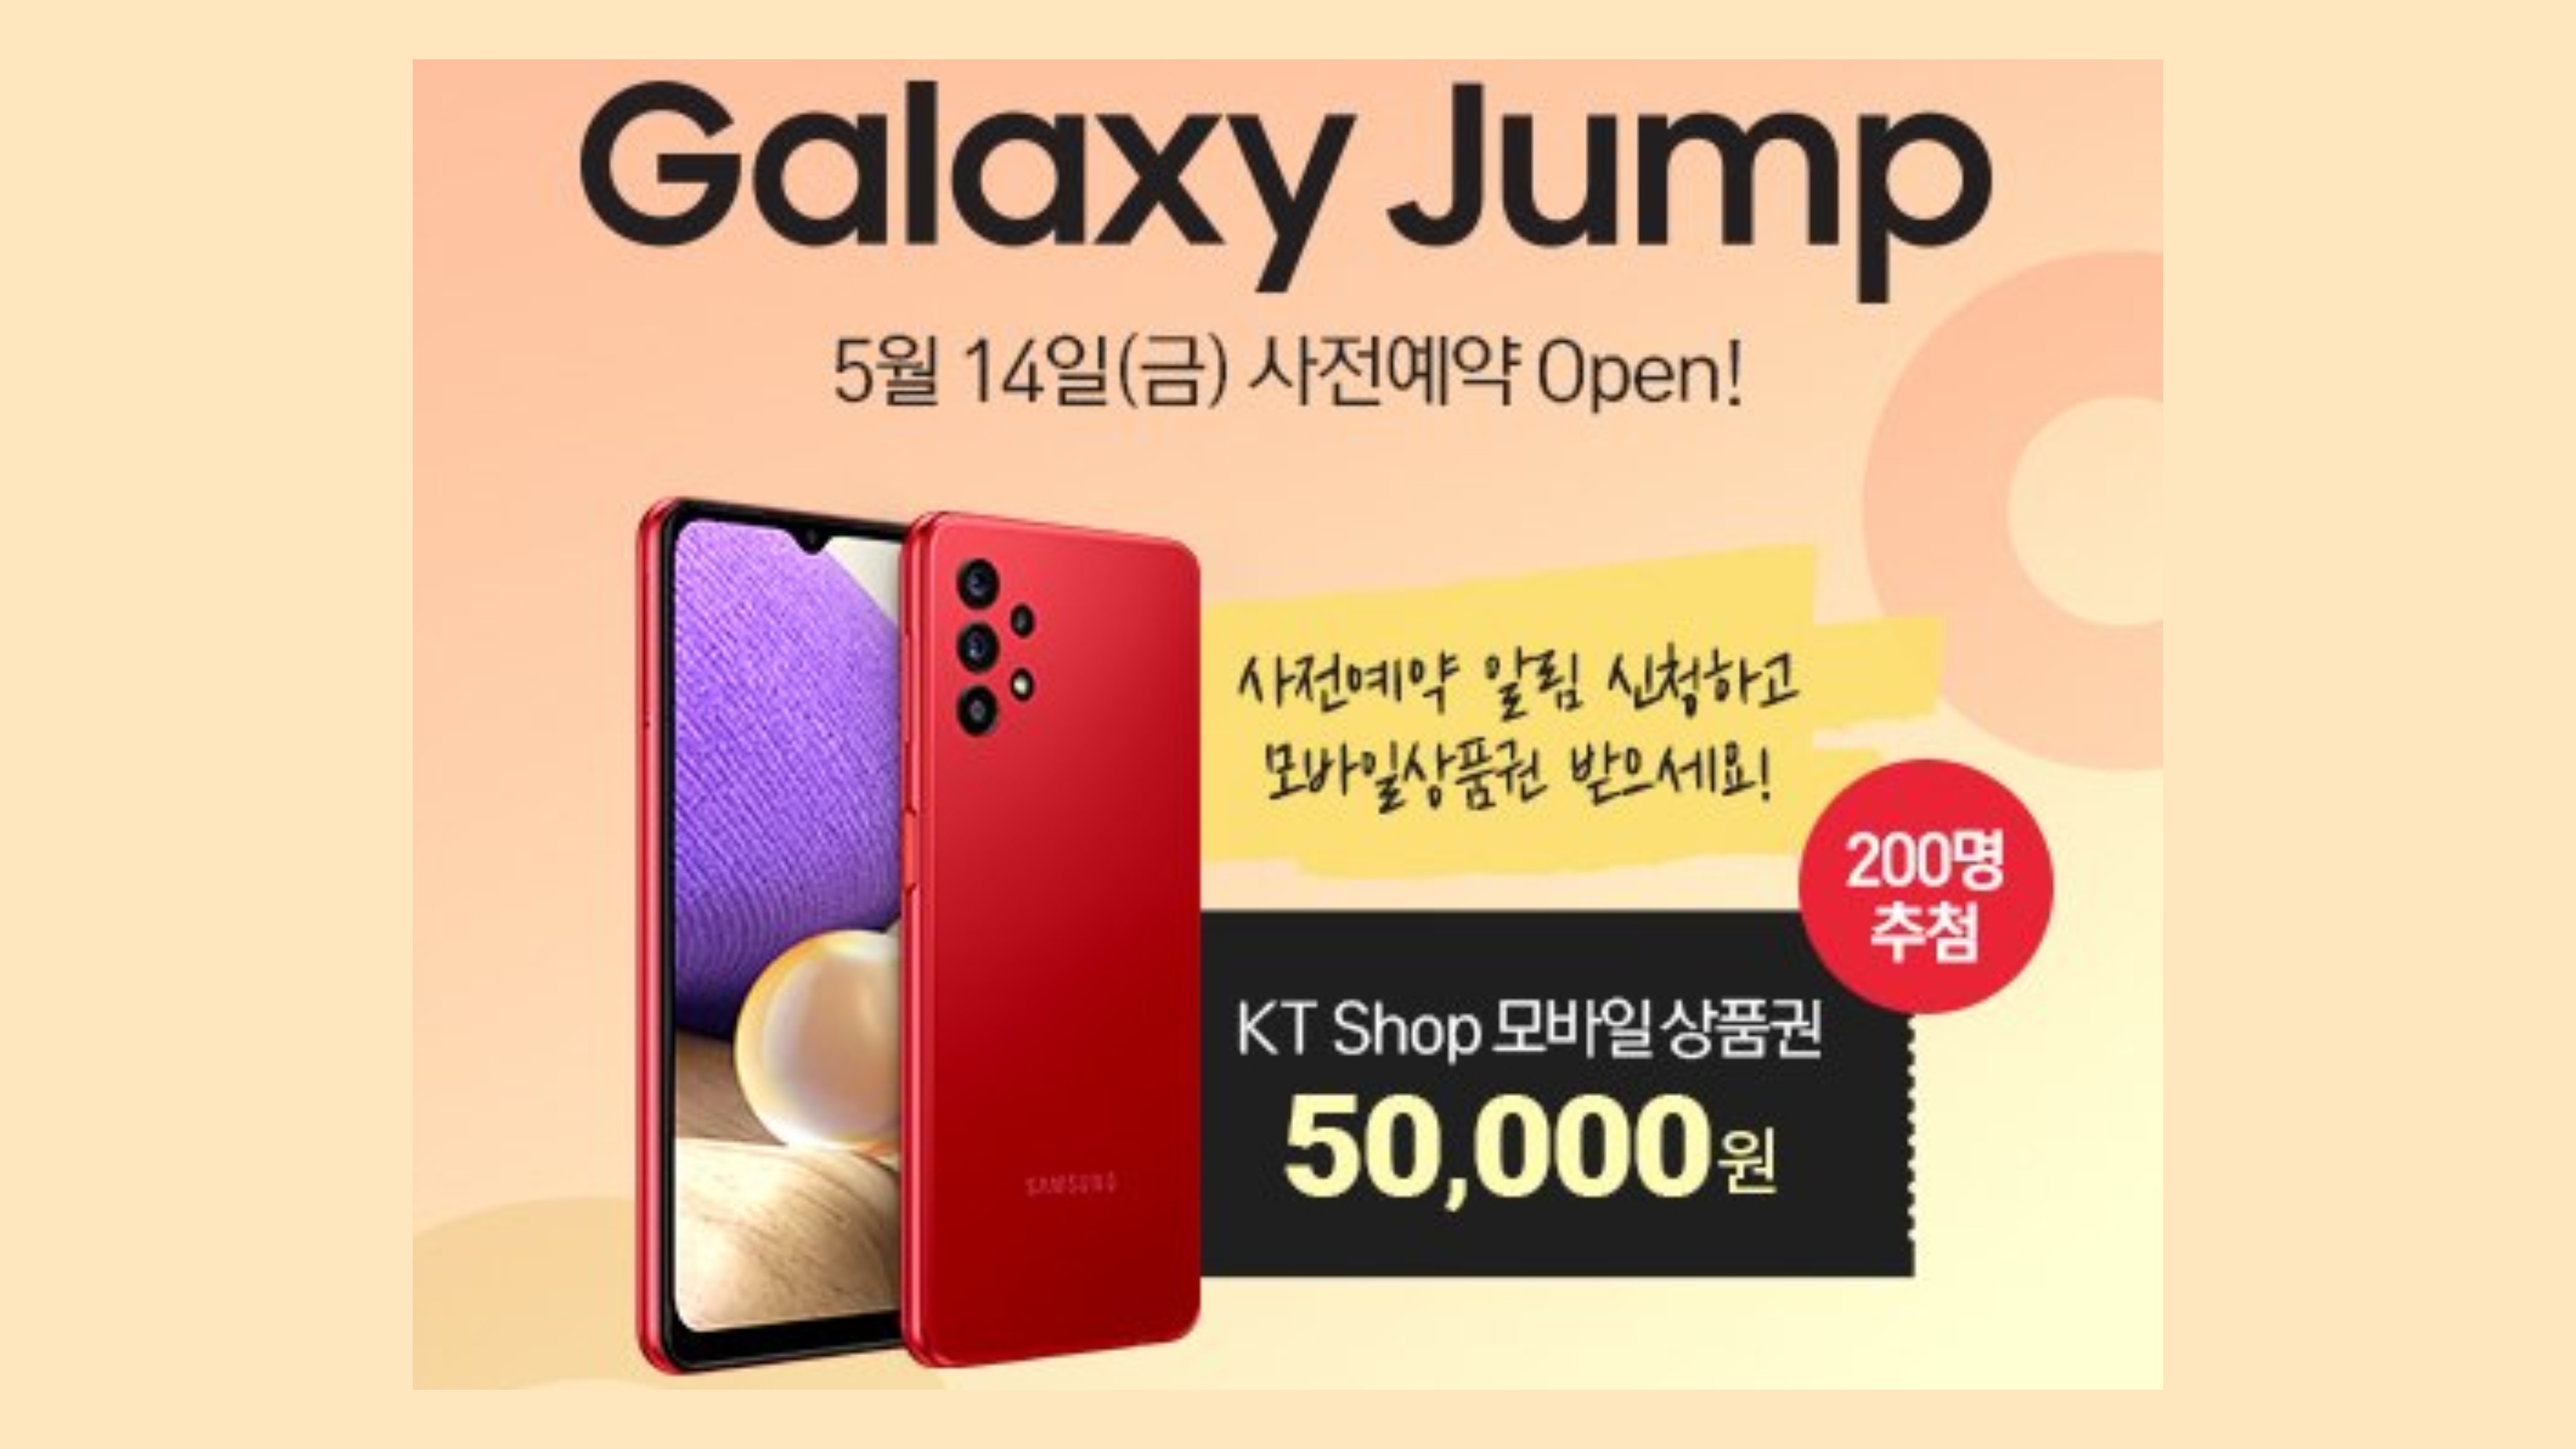 Samsung Galaxy Jump Pre-Order Date KT Shop South Korea